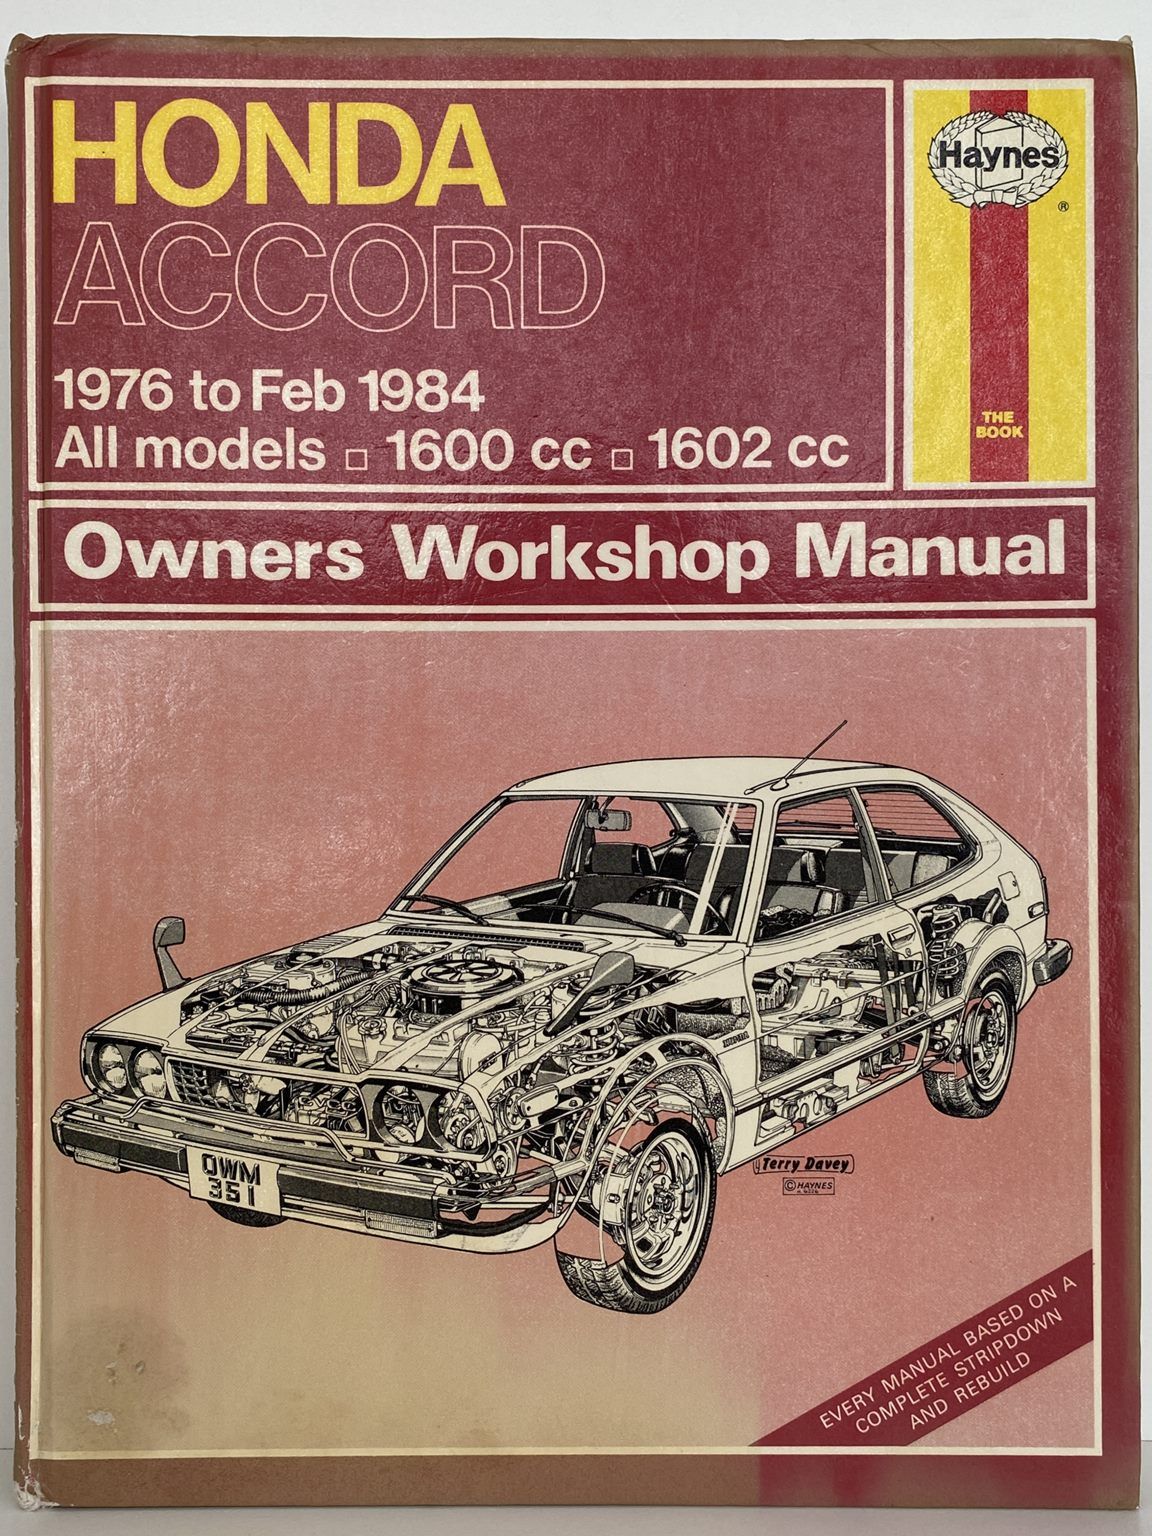 HONDA ACCORD - all models 1976 to 1984 Owners Workshop Manual